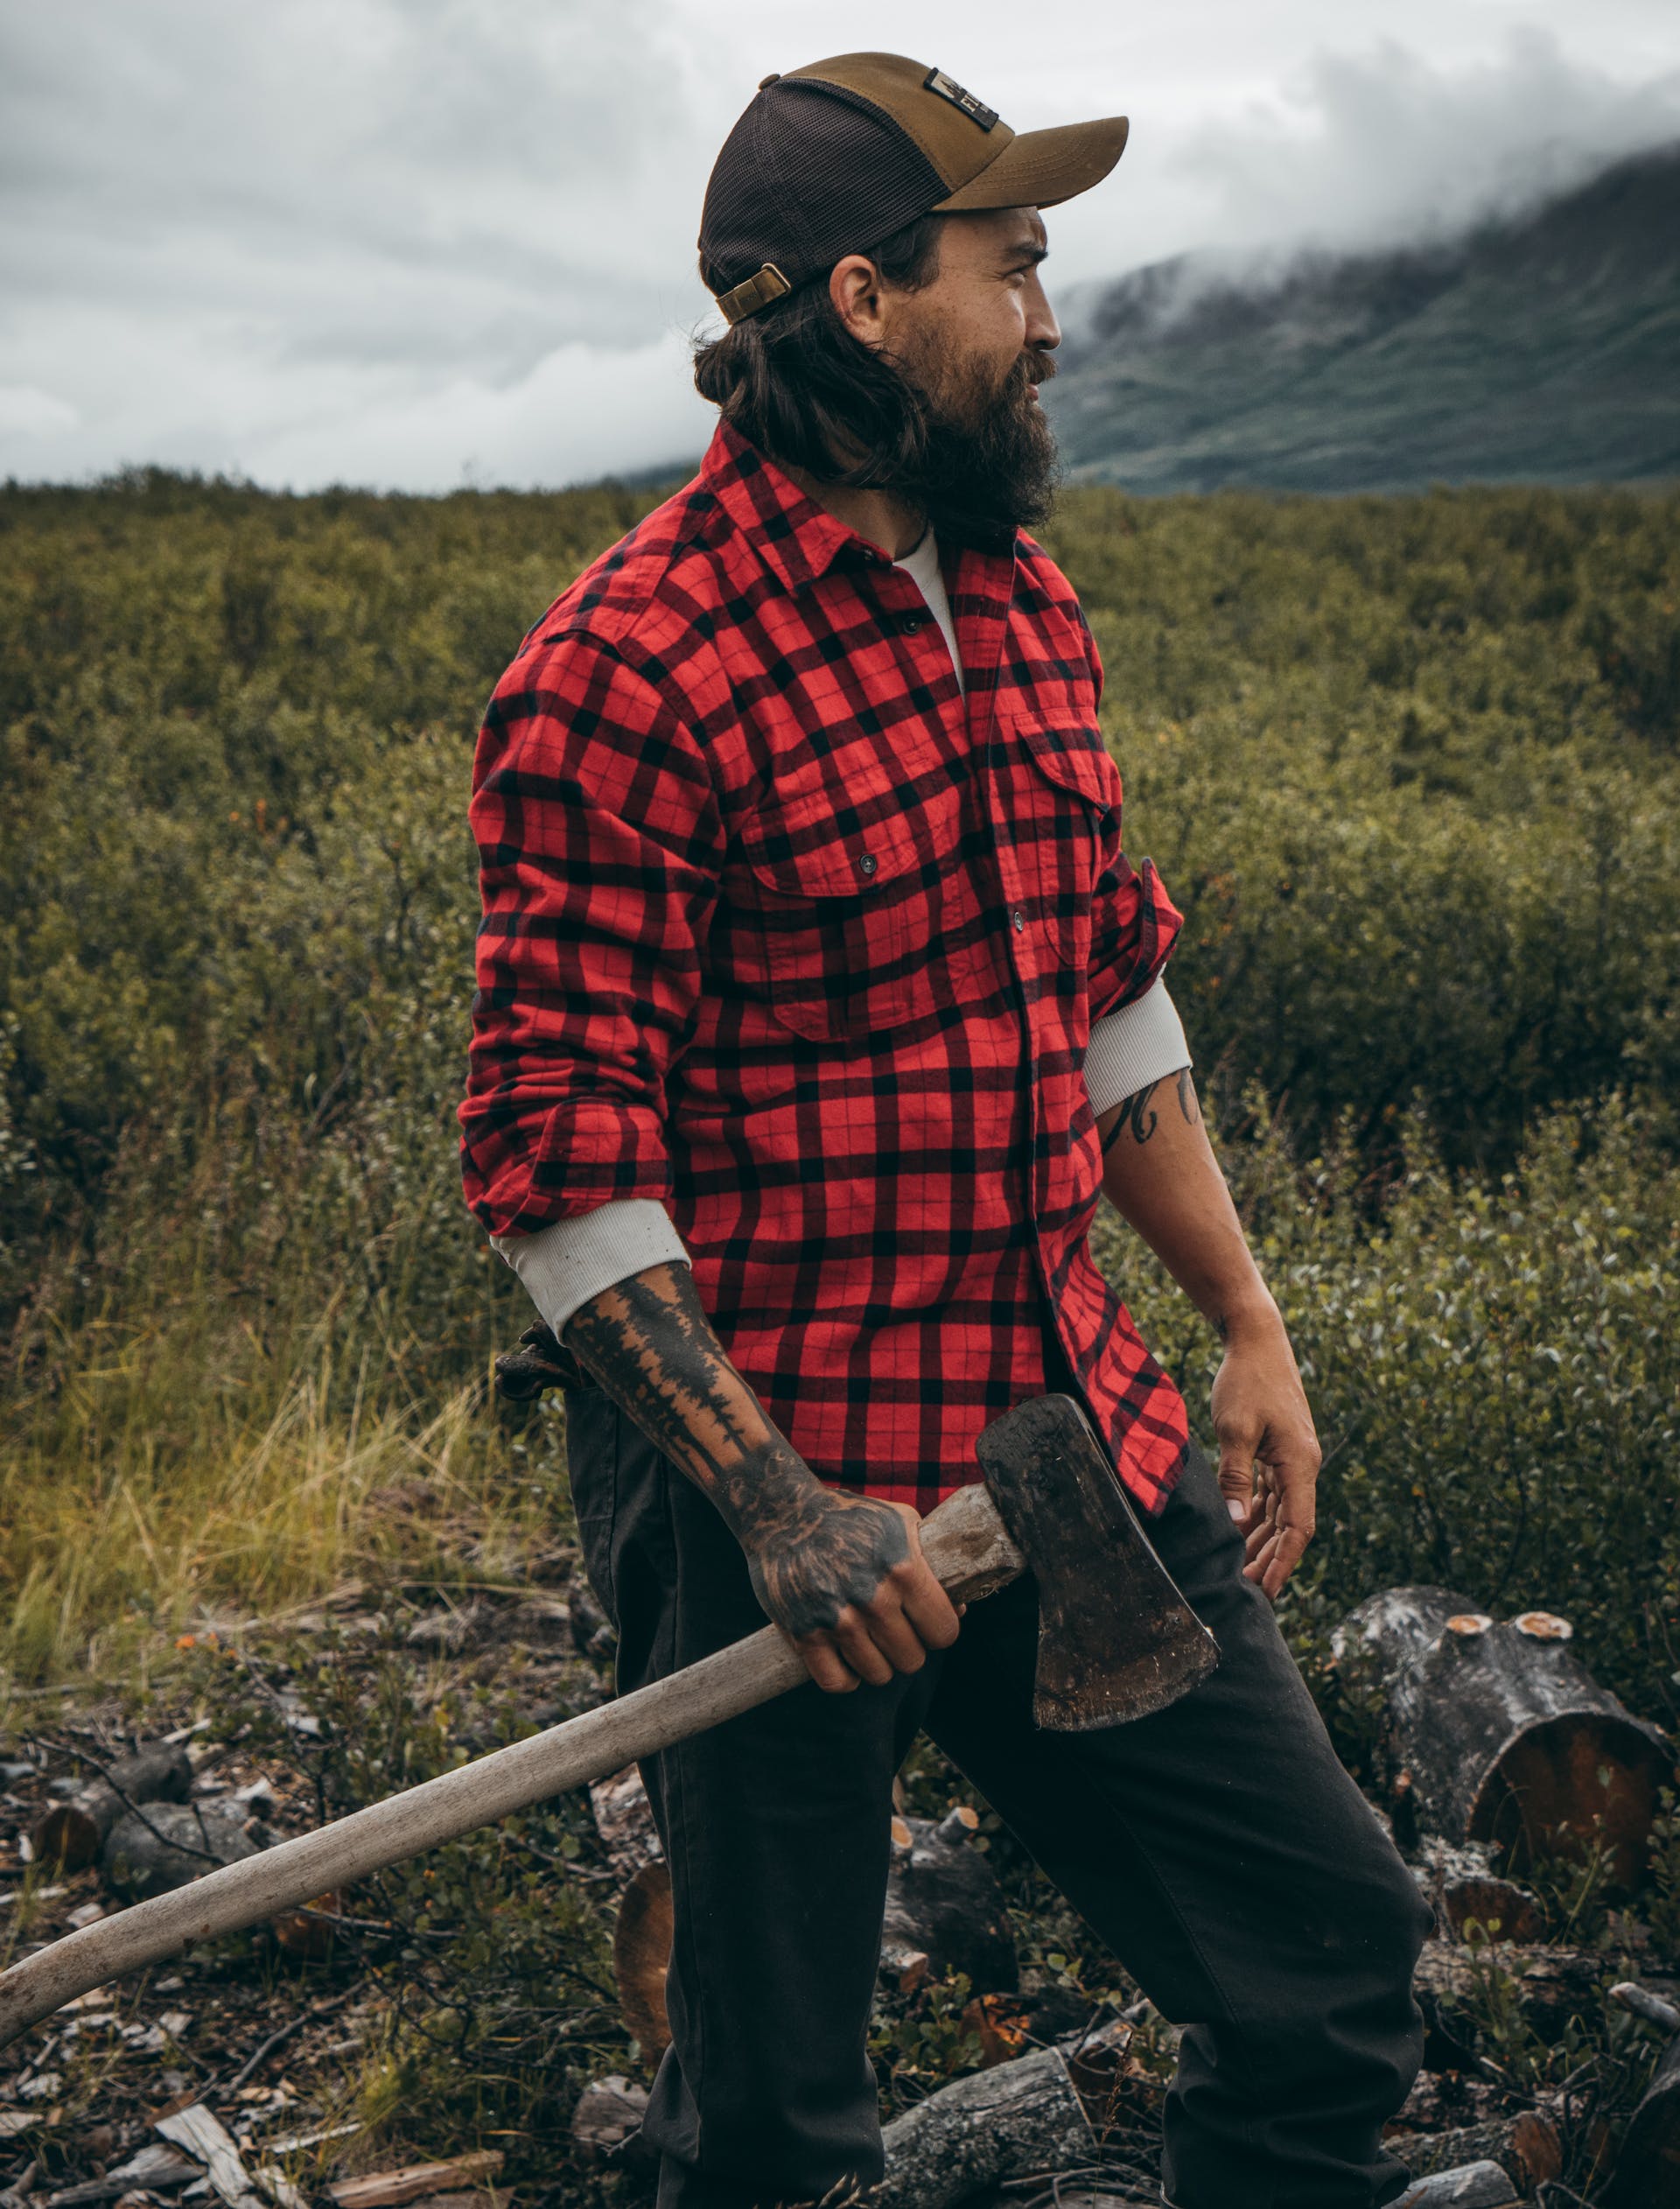 Man standing in a field with an axe chopping wood in a Filson Alaskan Guide Shirt